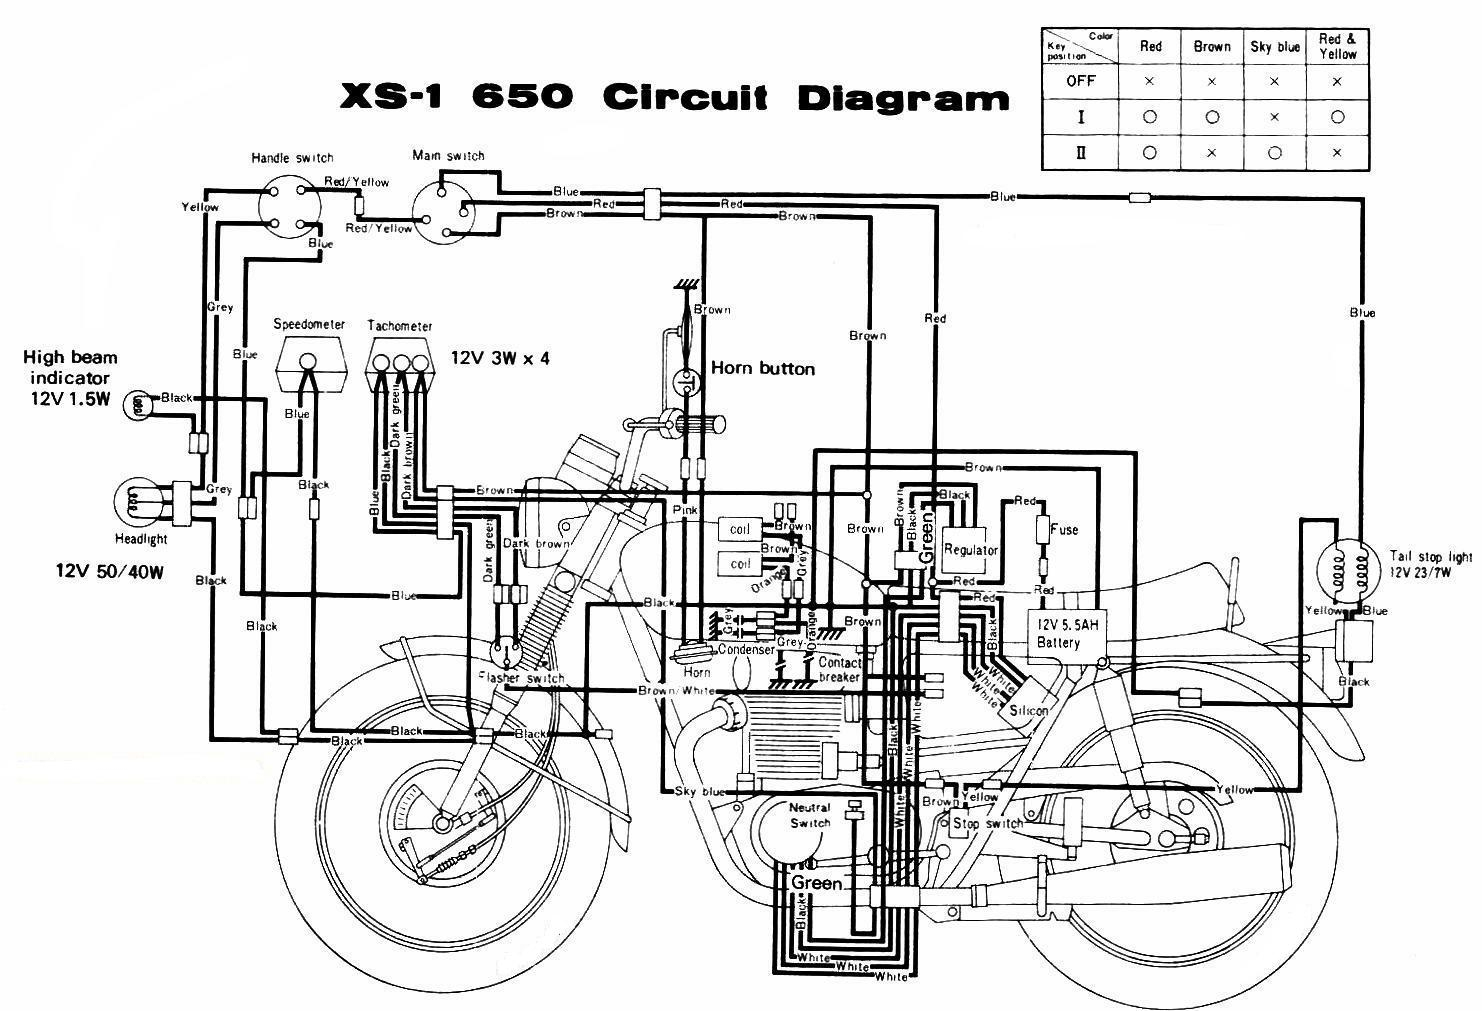 Honda Motorcycle Electrical Wiring Diagram | Manual E-Books - Honda Motorcycle Wiring Diagram